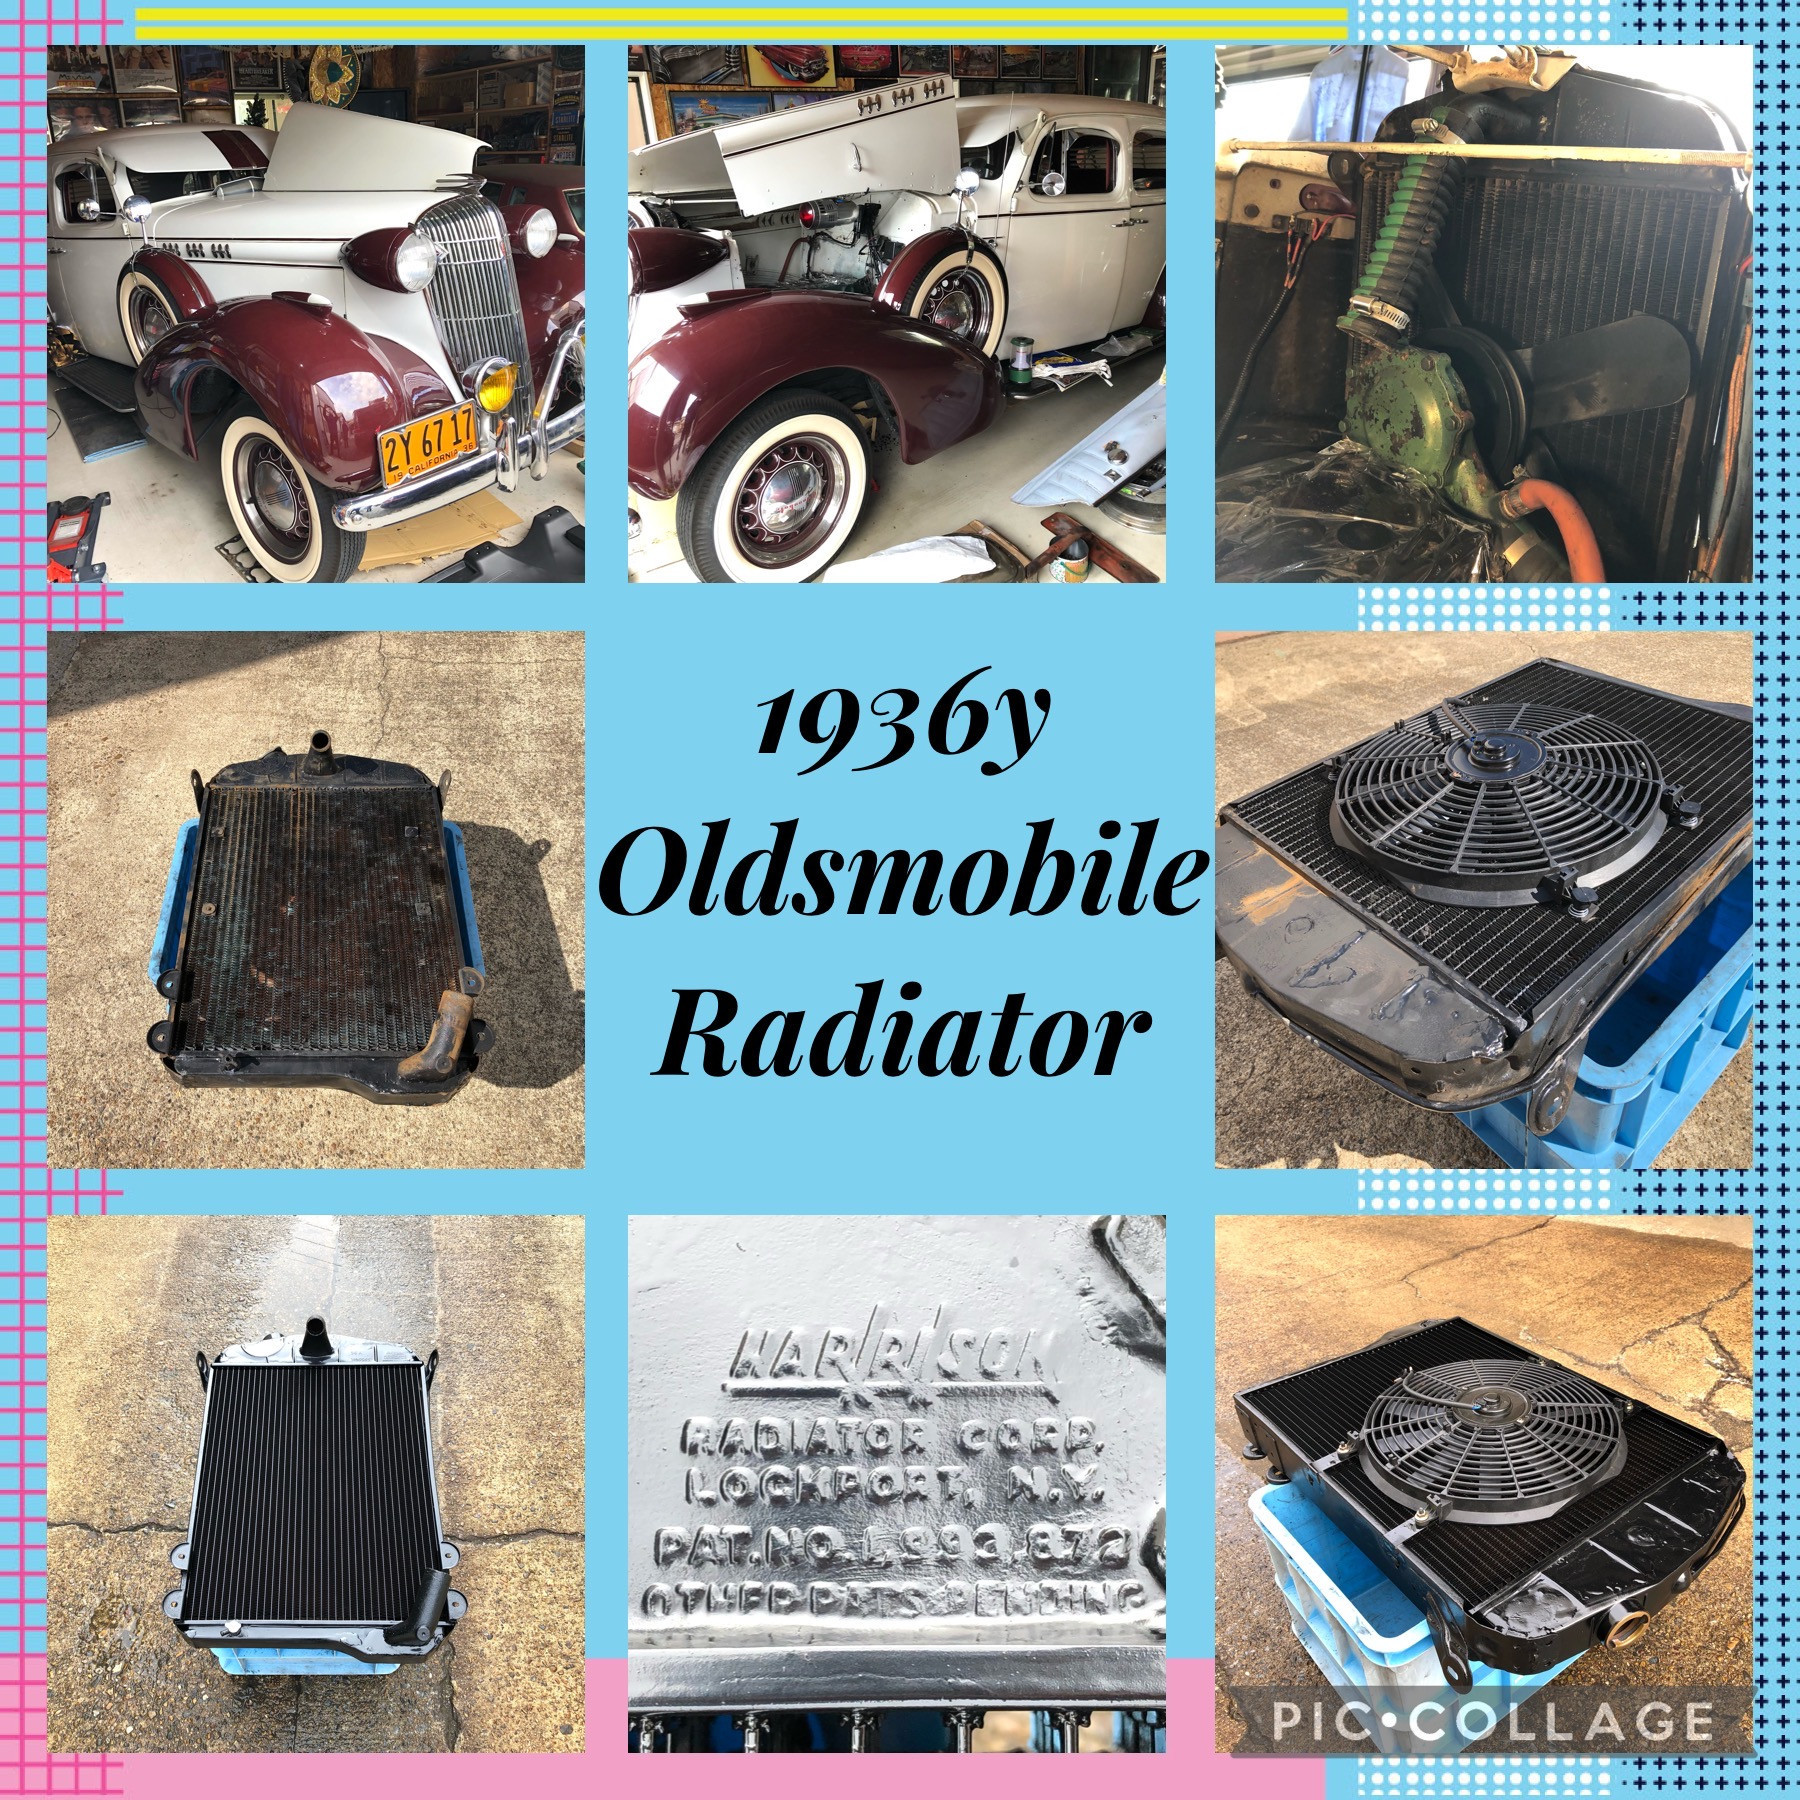 1936y Oldsmobile ラジエーター